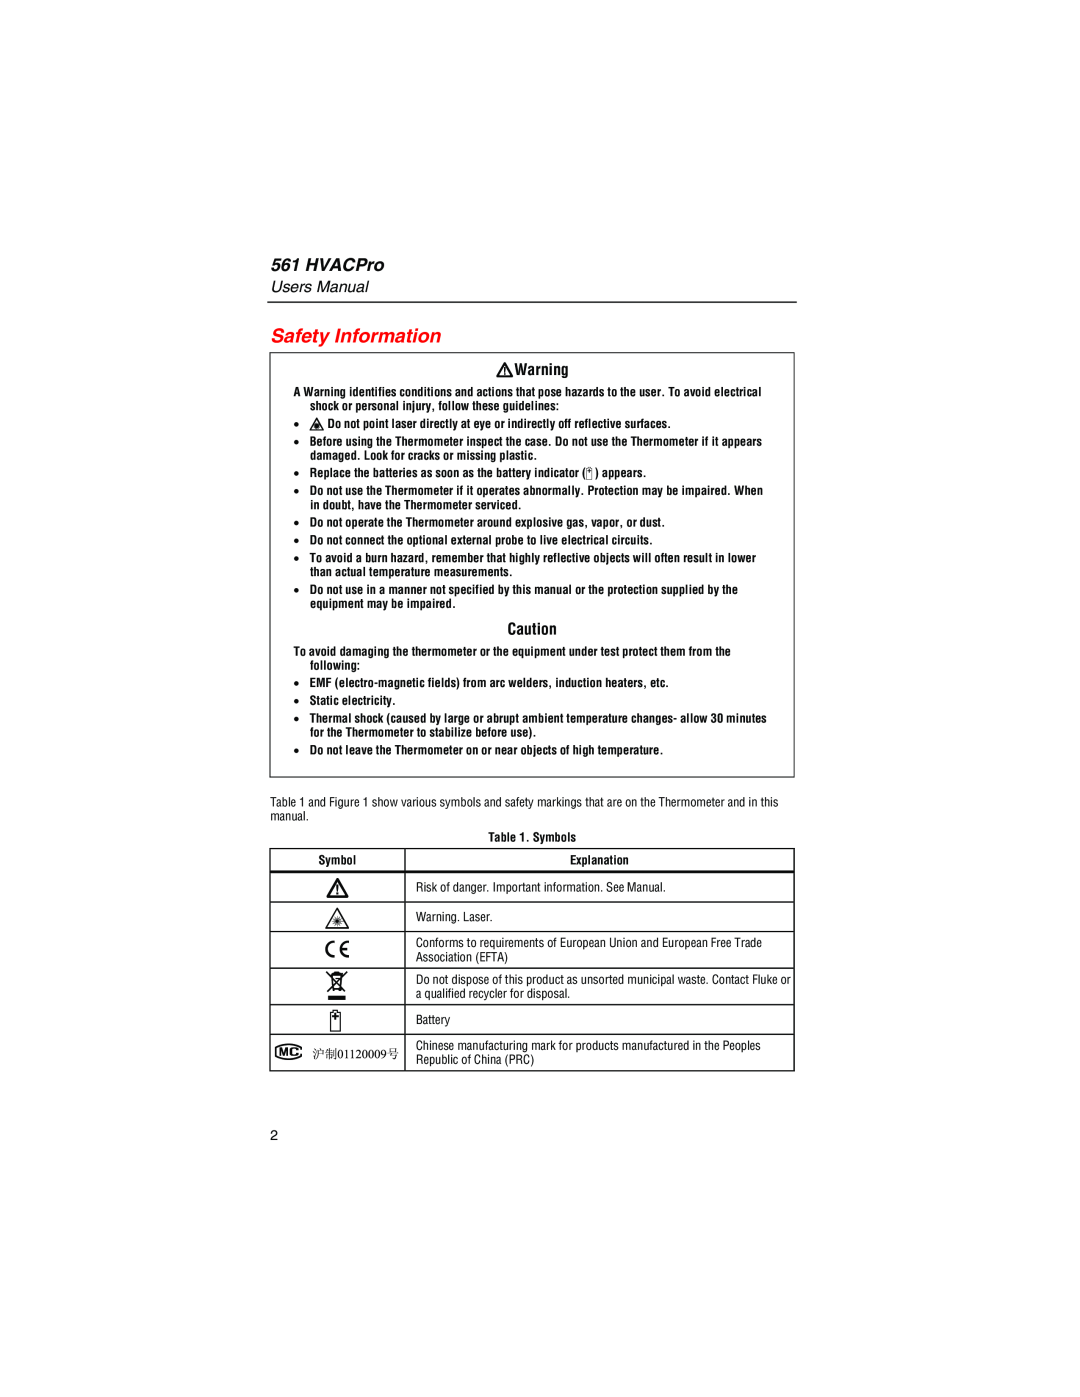 Fluke 561 user manual Safety Information, WWarning, HVACPro 